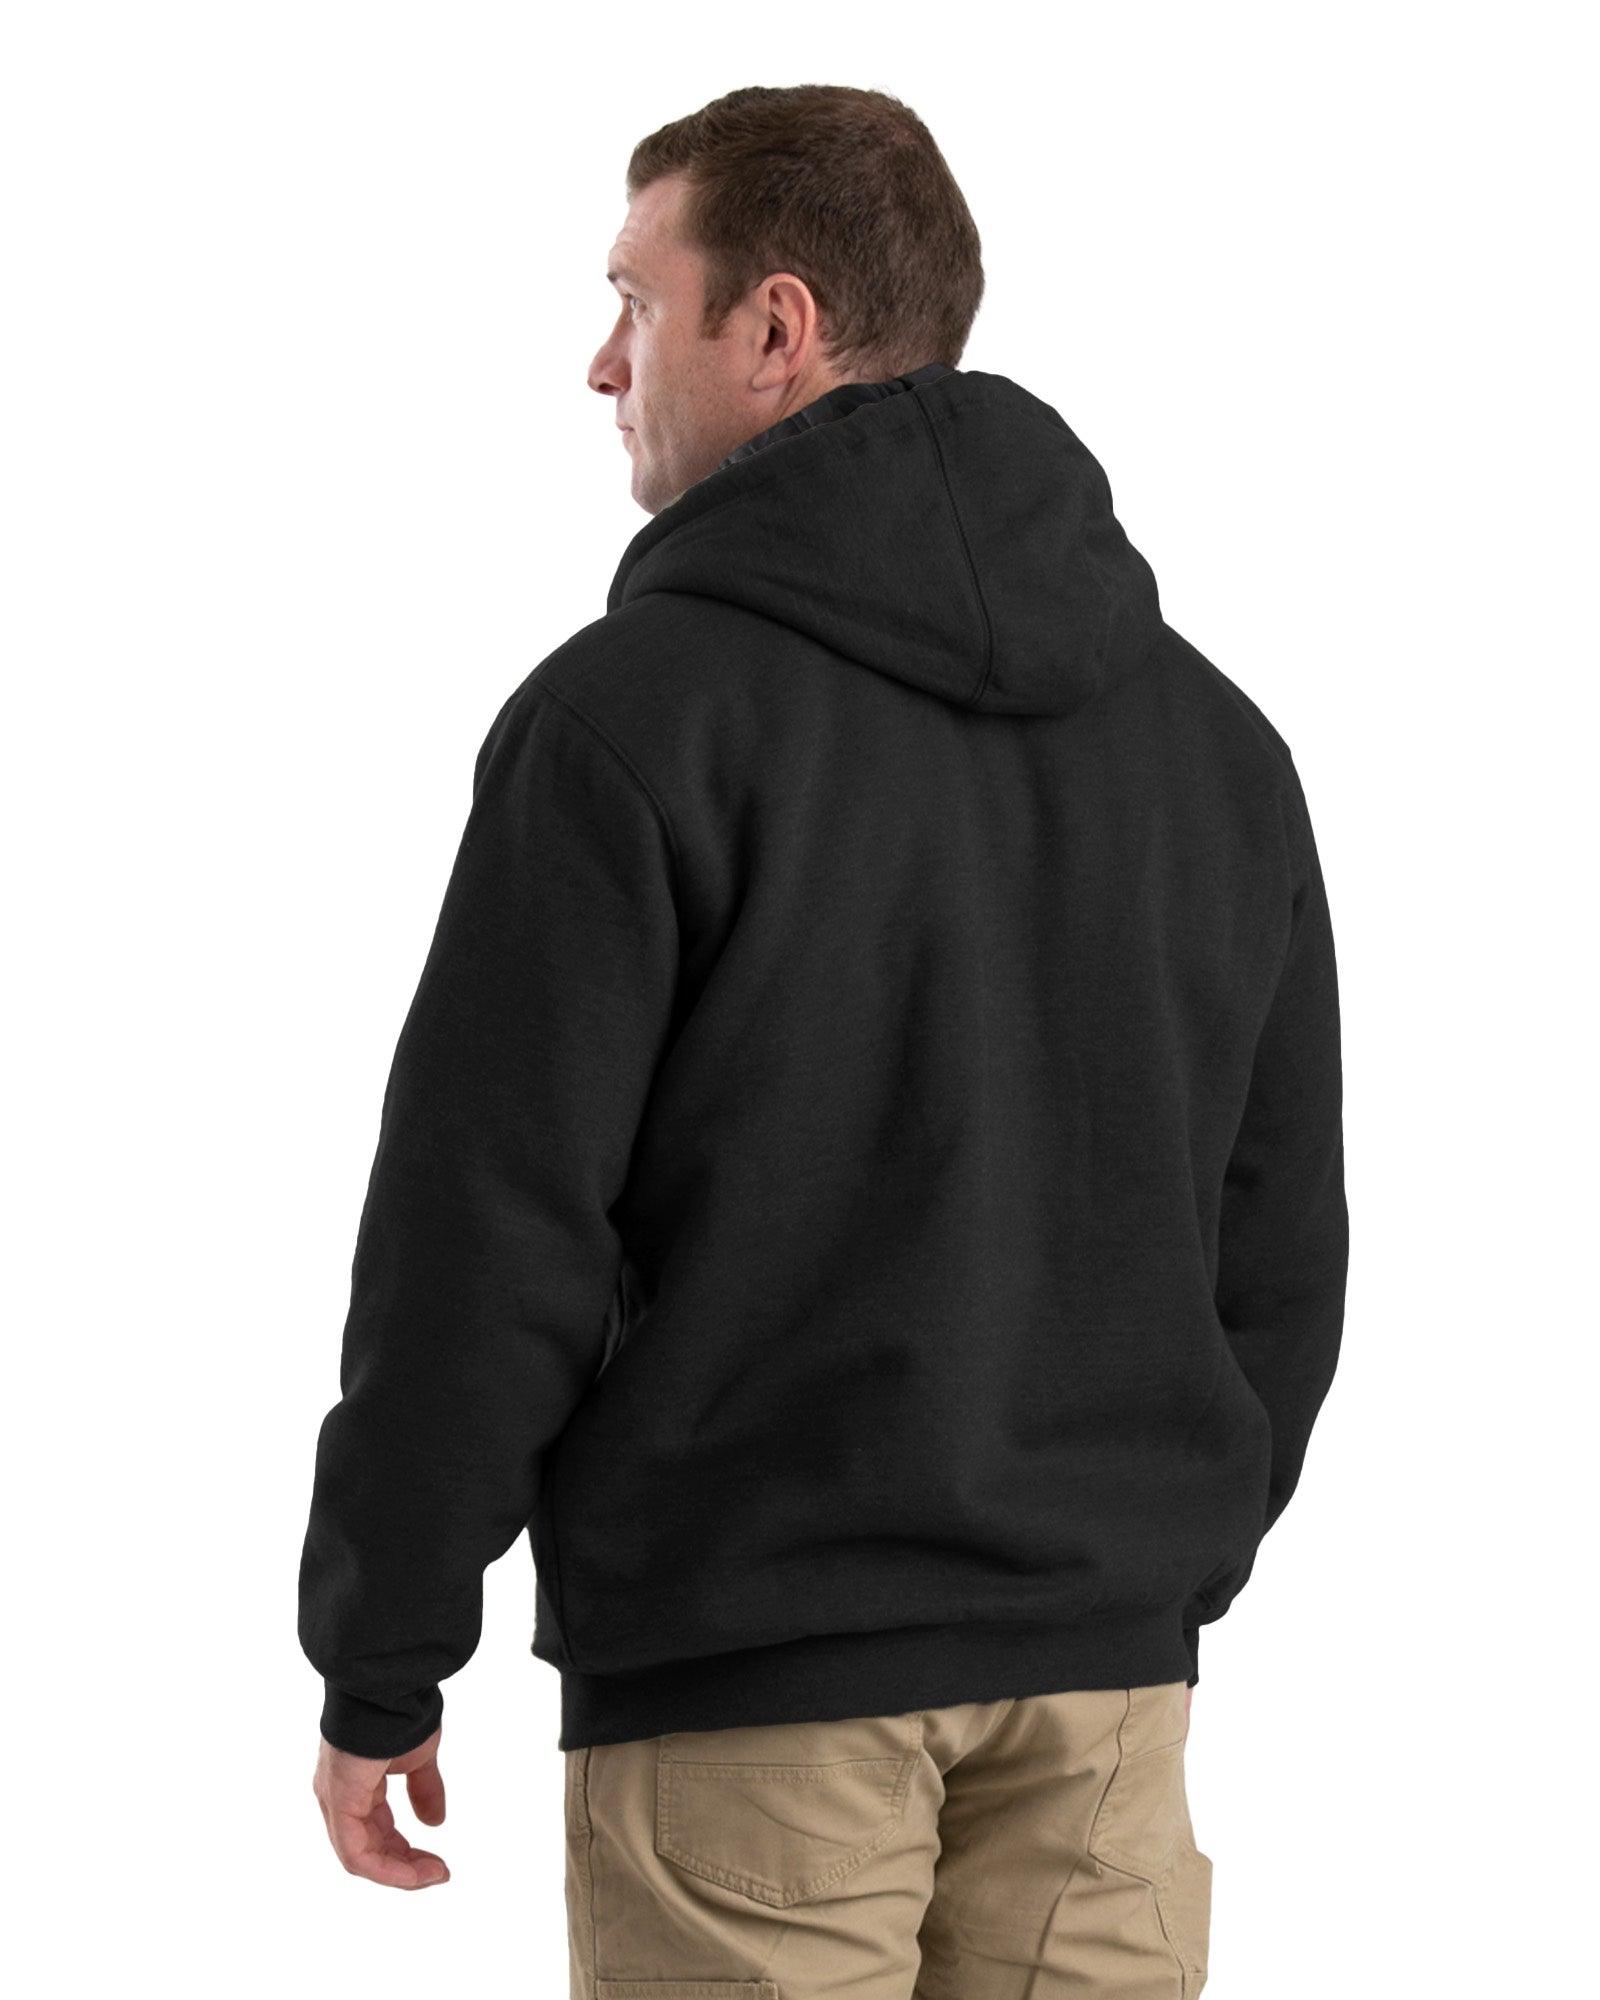 SZ612BK Highland Insulated Full-Zip Hooded Sweatshirt